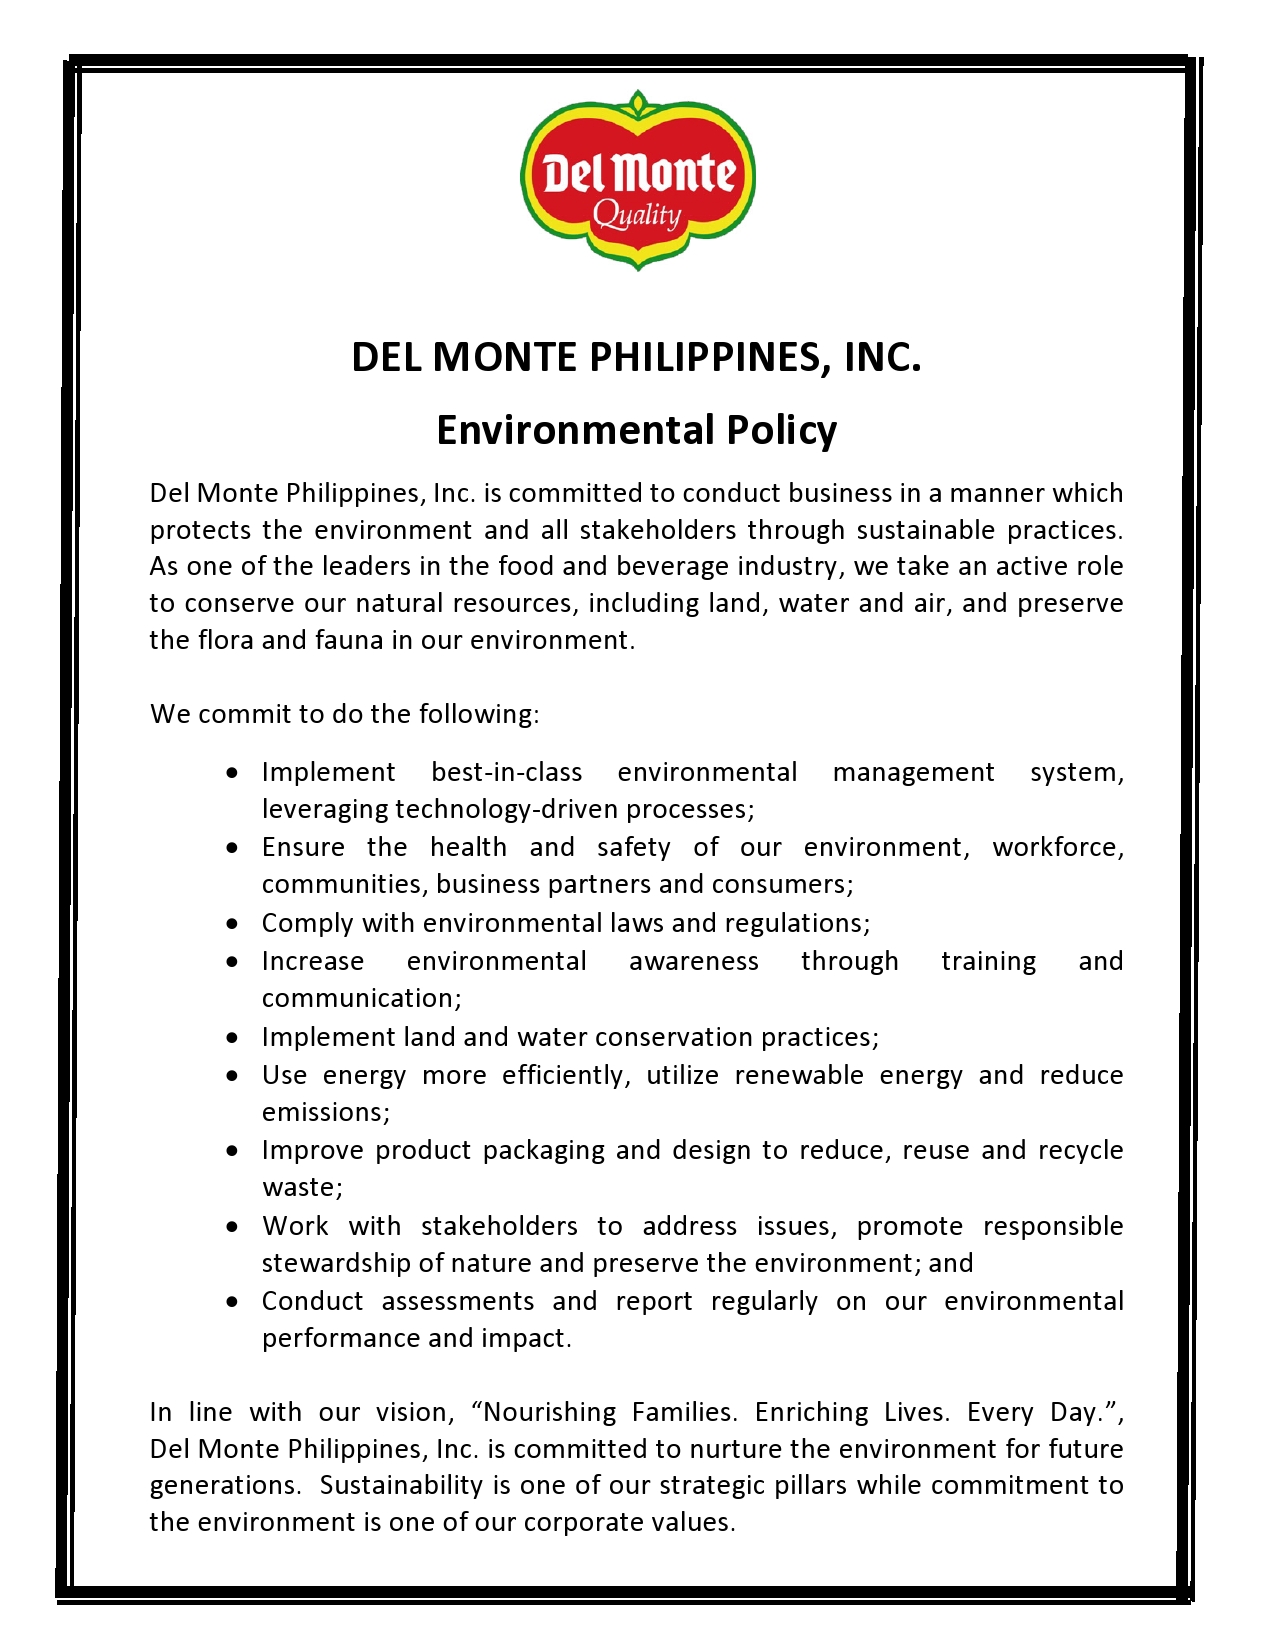 DMPI Environmental Policy for posting